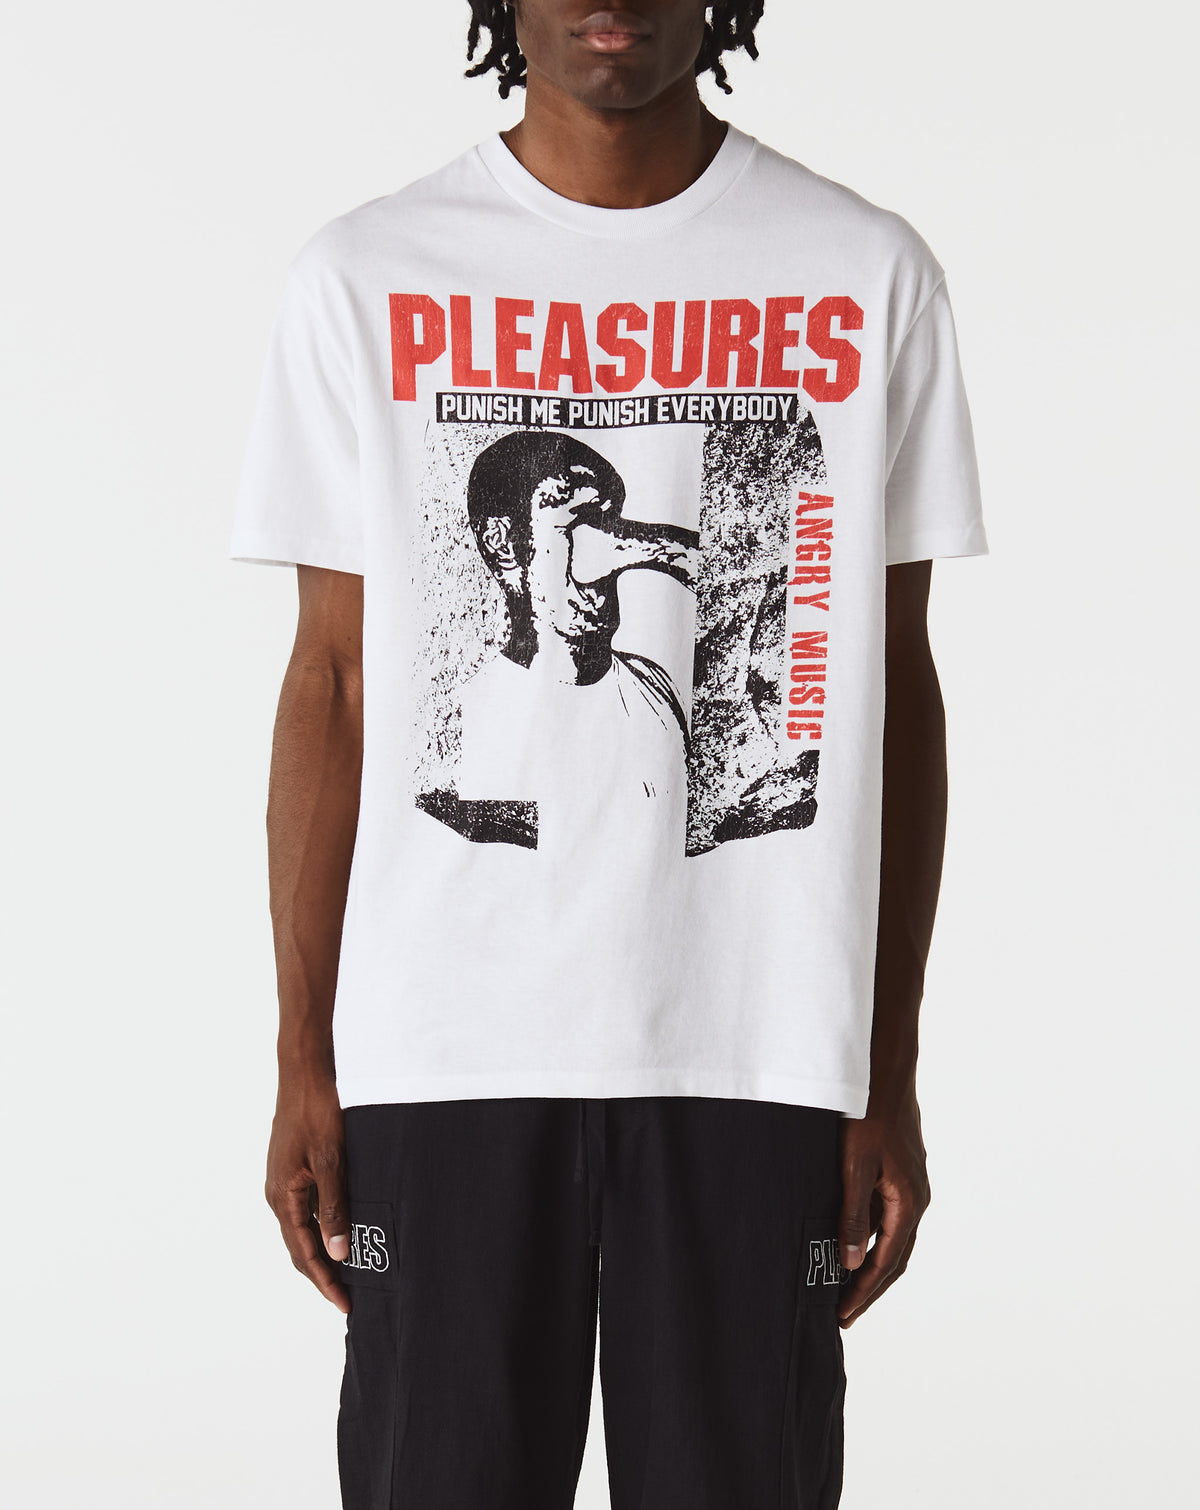 Pleasures Punish T-Shirt - Rule of Next Apparel